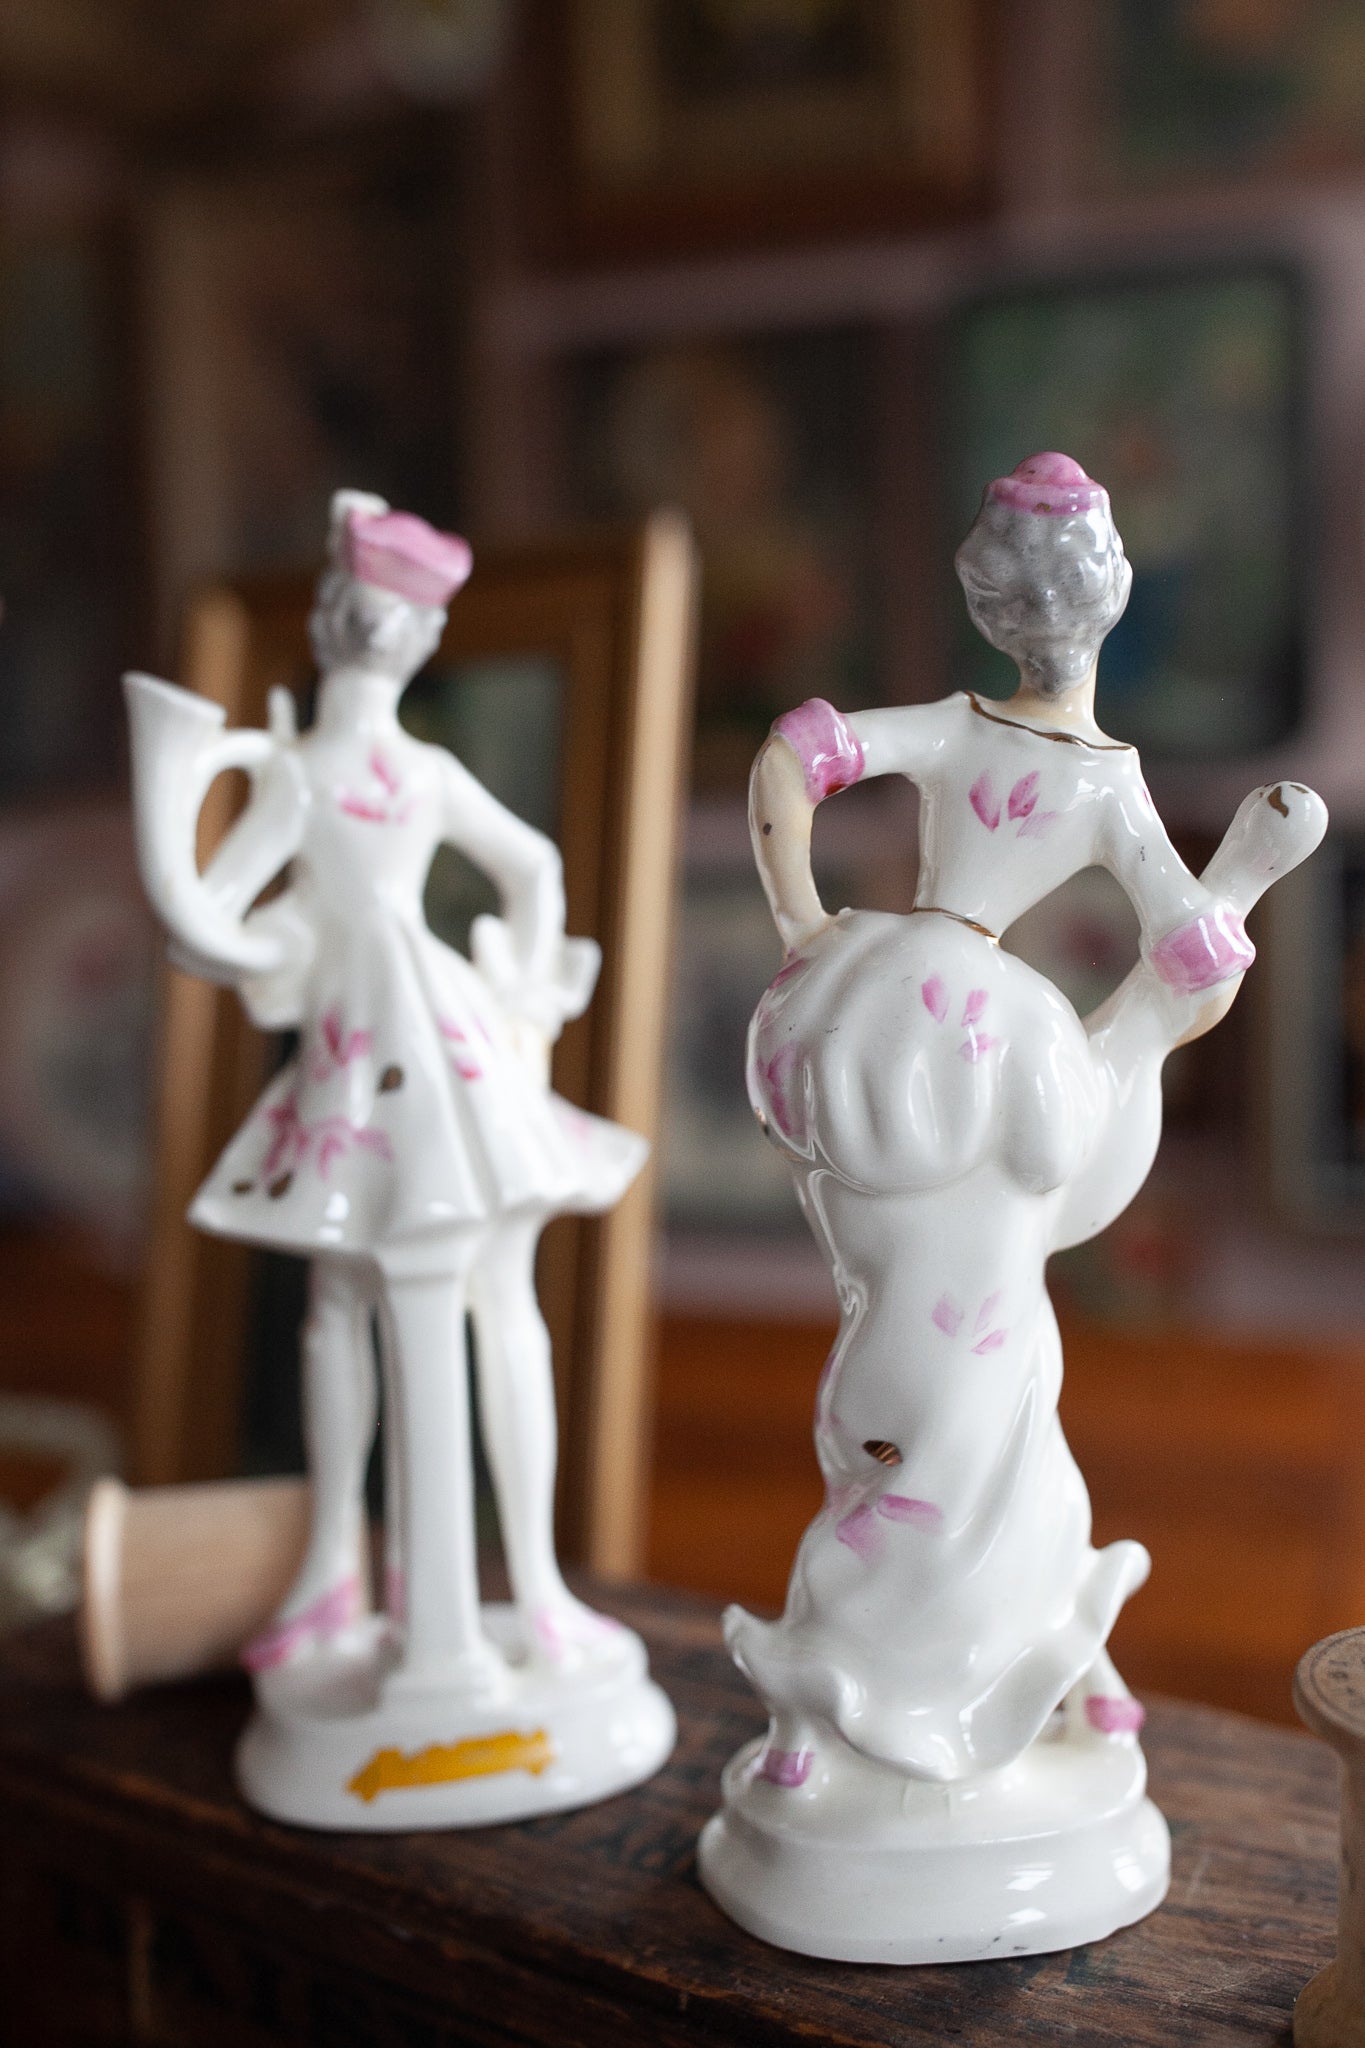 Vintage Couple- Atlas Made in Japan - Pink Figurines -Musicians - Porcelain Figurines